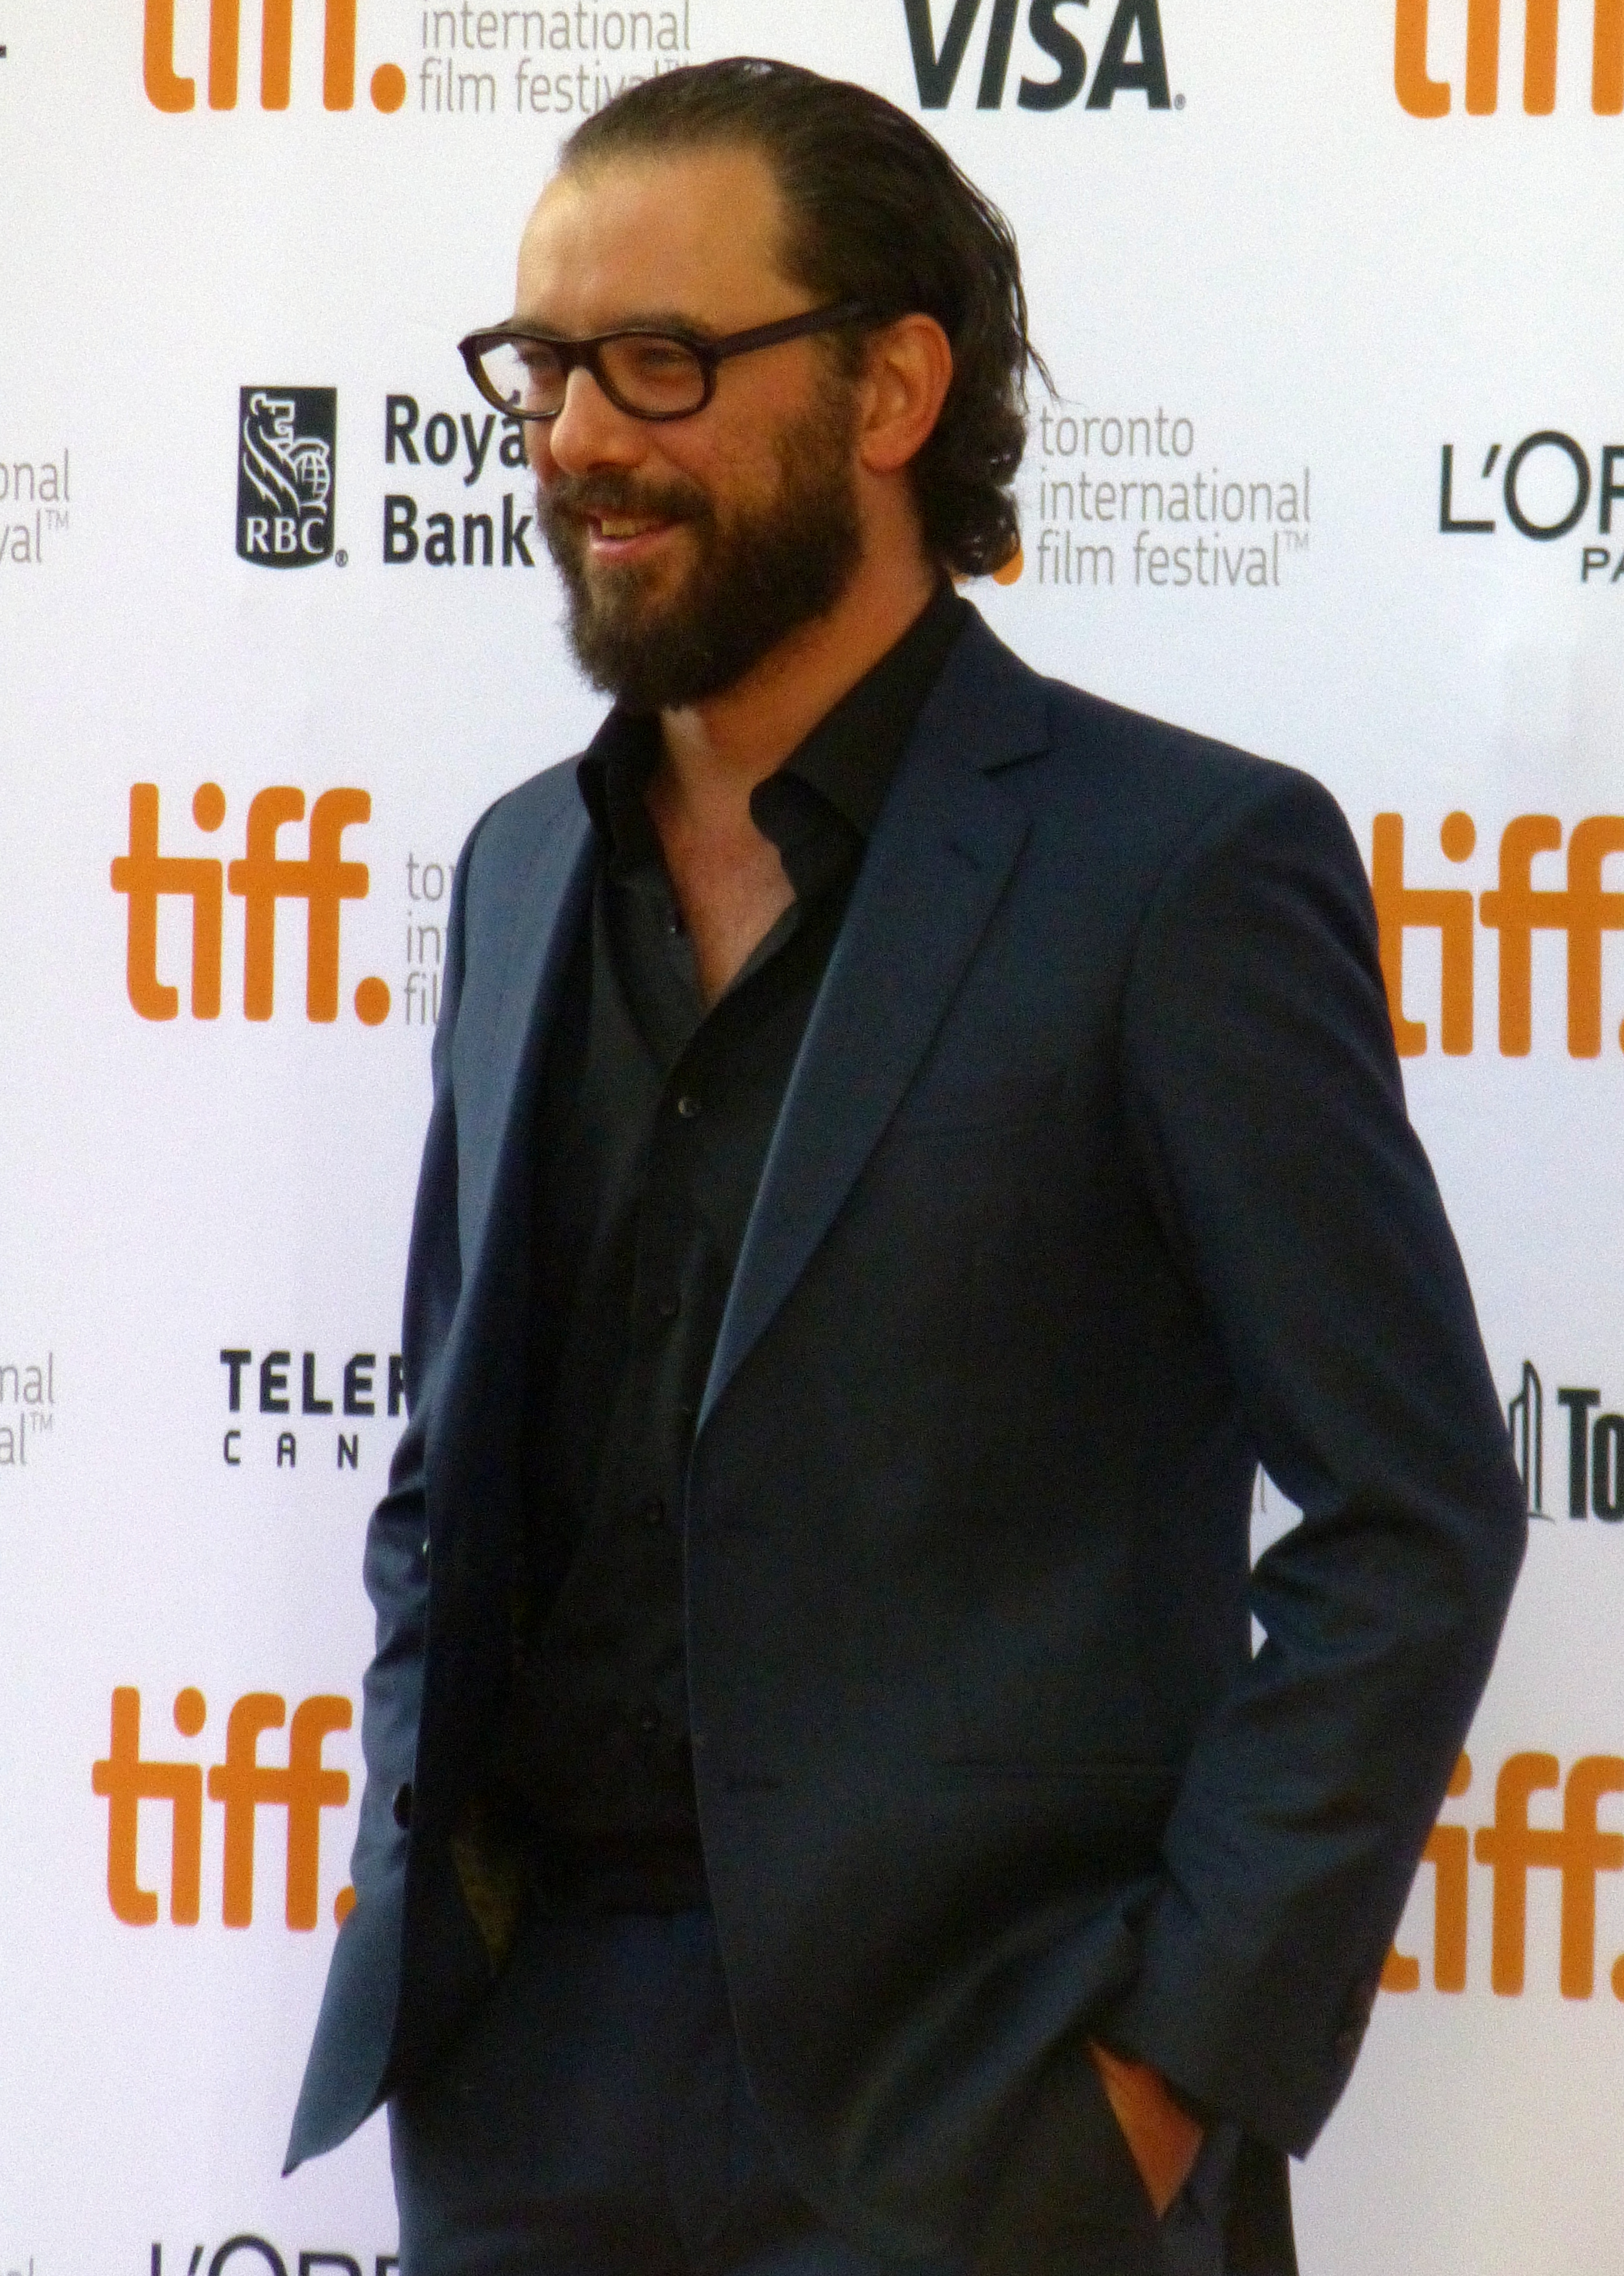 Roskam at the 2014 Toronto International Film Festival